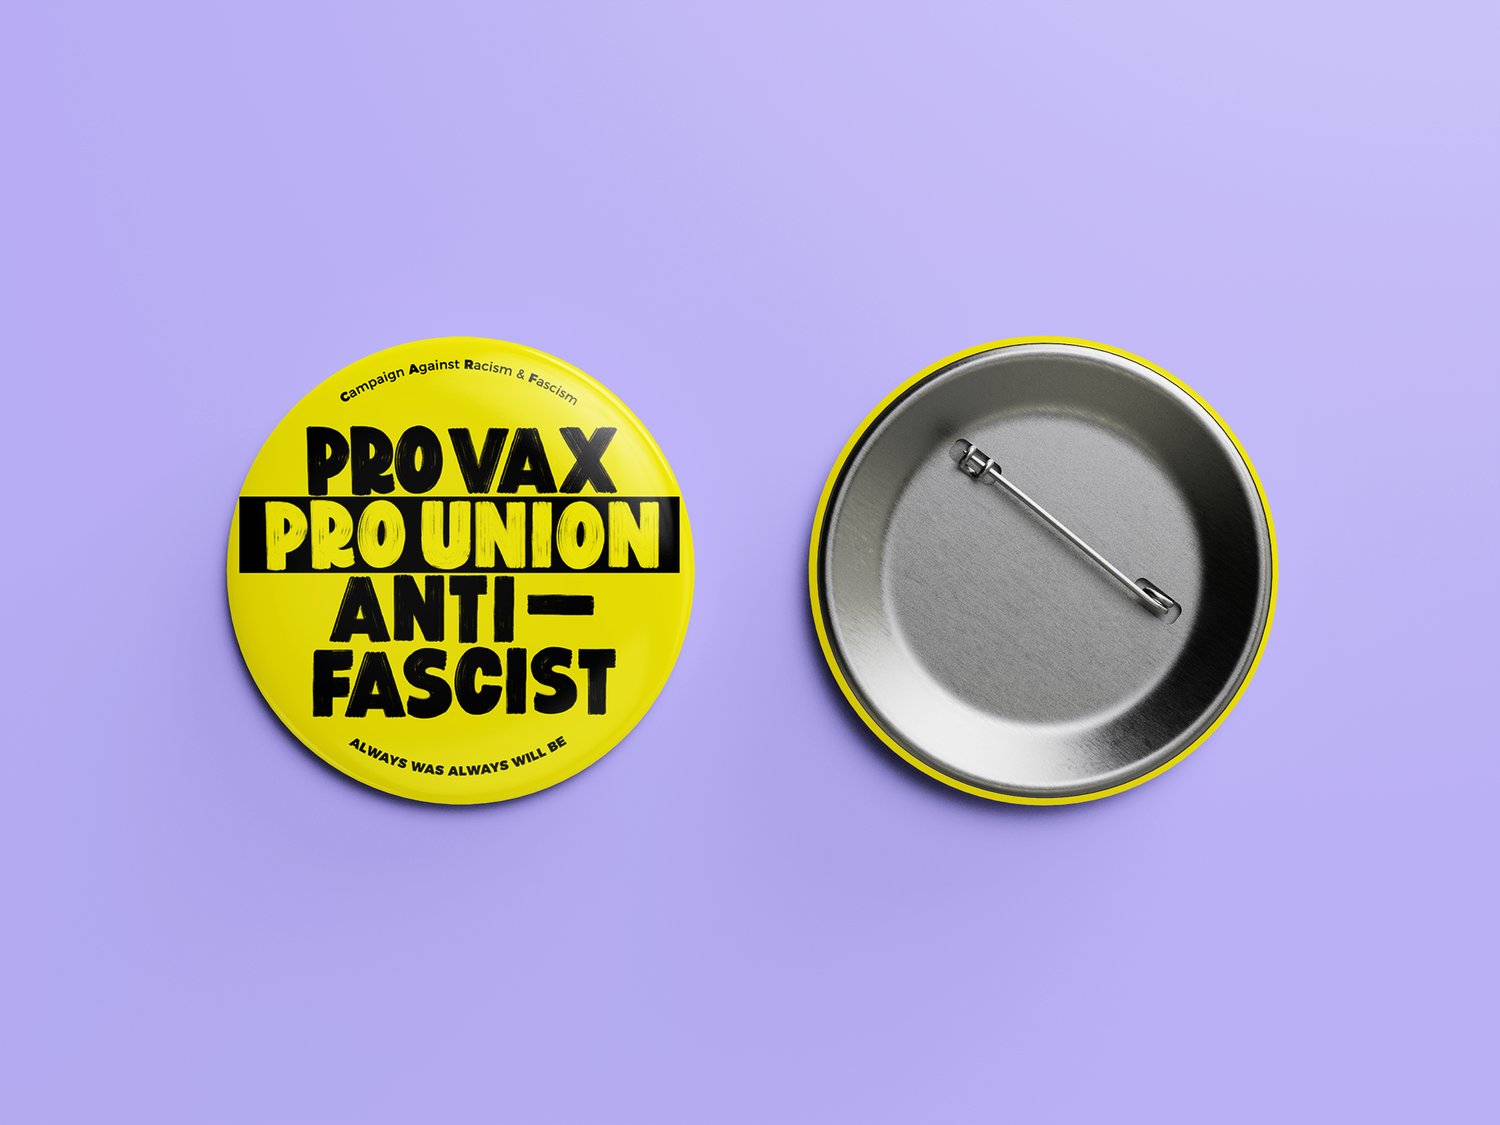 Image of Pro Vax, Pro Union, Anti-Fascist 38mm round button